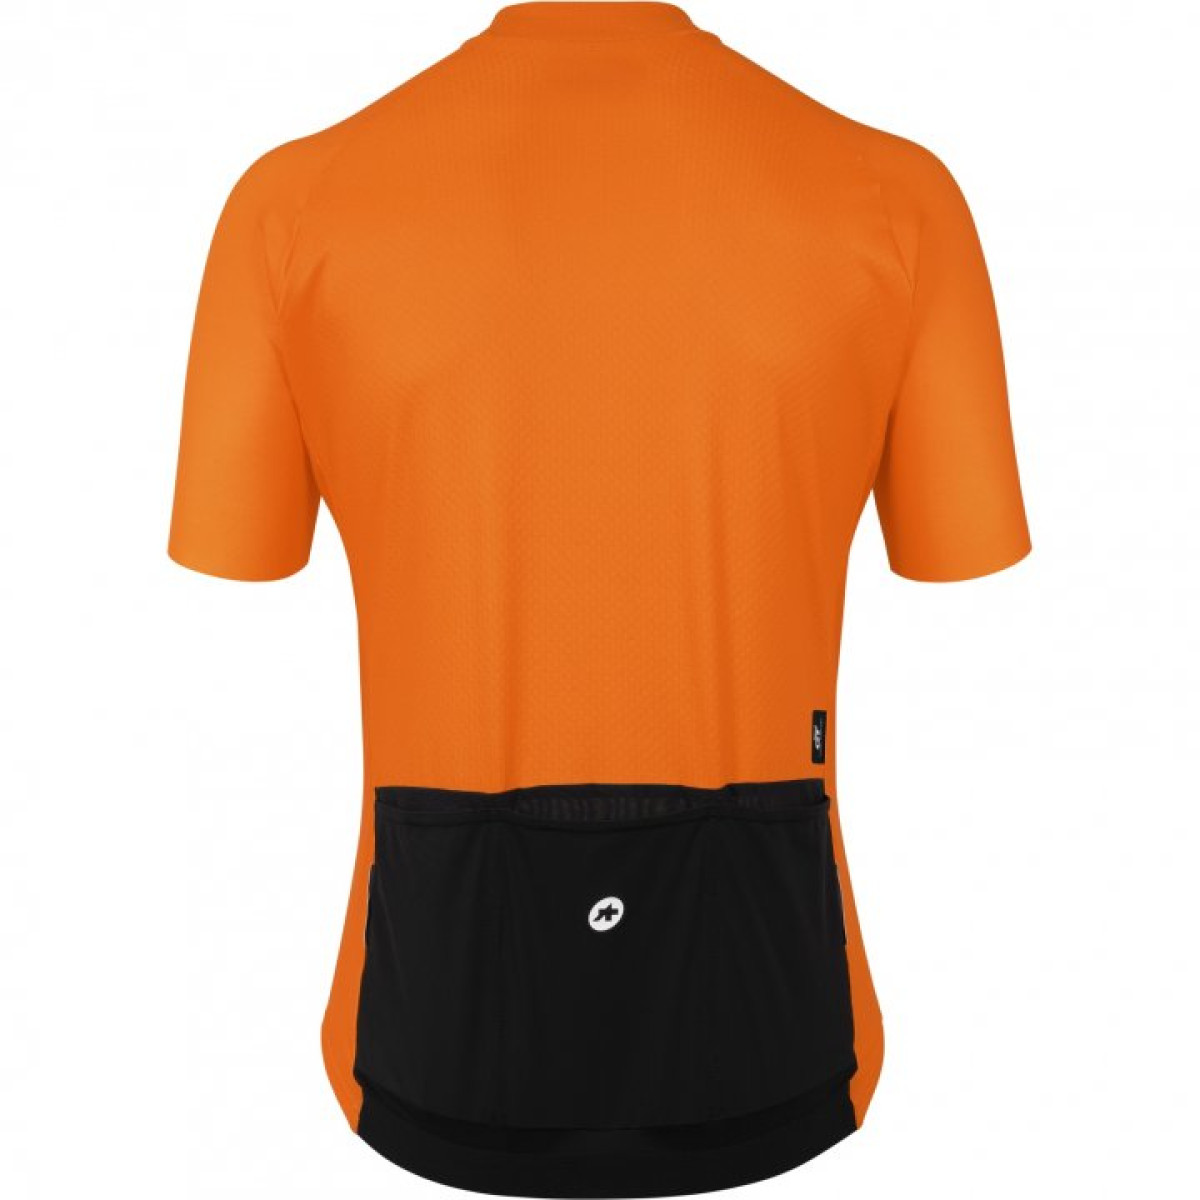 Assos Mille GT Summer C2 vyriški marškinėliai / Droid Orange